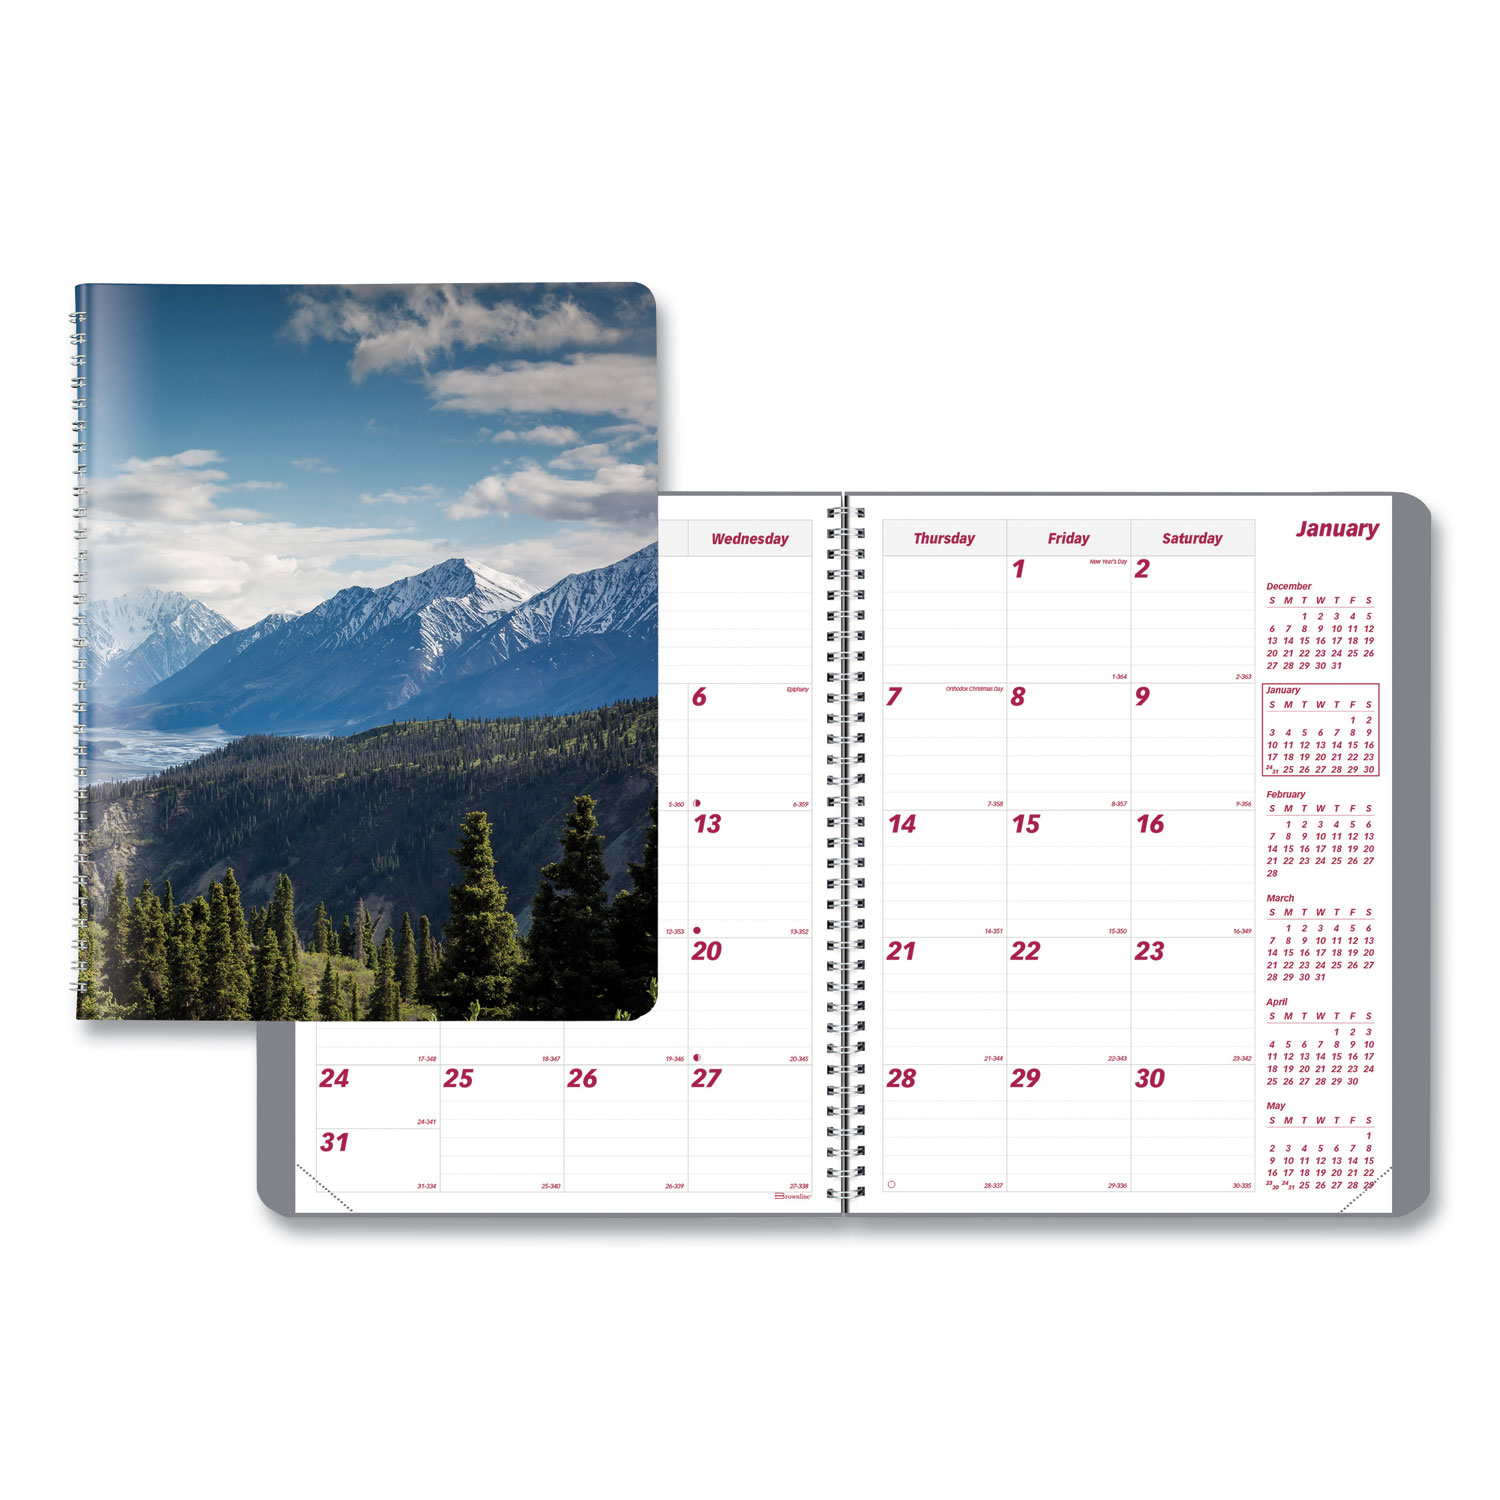  Brownline CB1262G.04 Mountains 14-Month Planner, 11 x 8.5, Blue/Green/Black, 2021 (REDCB1262G04) 